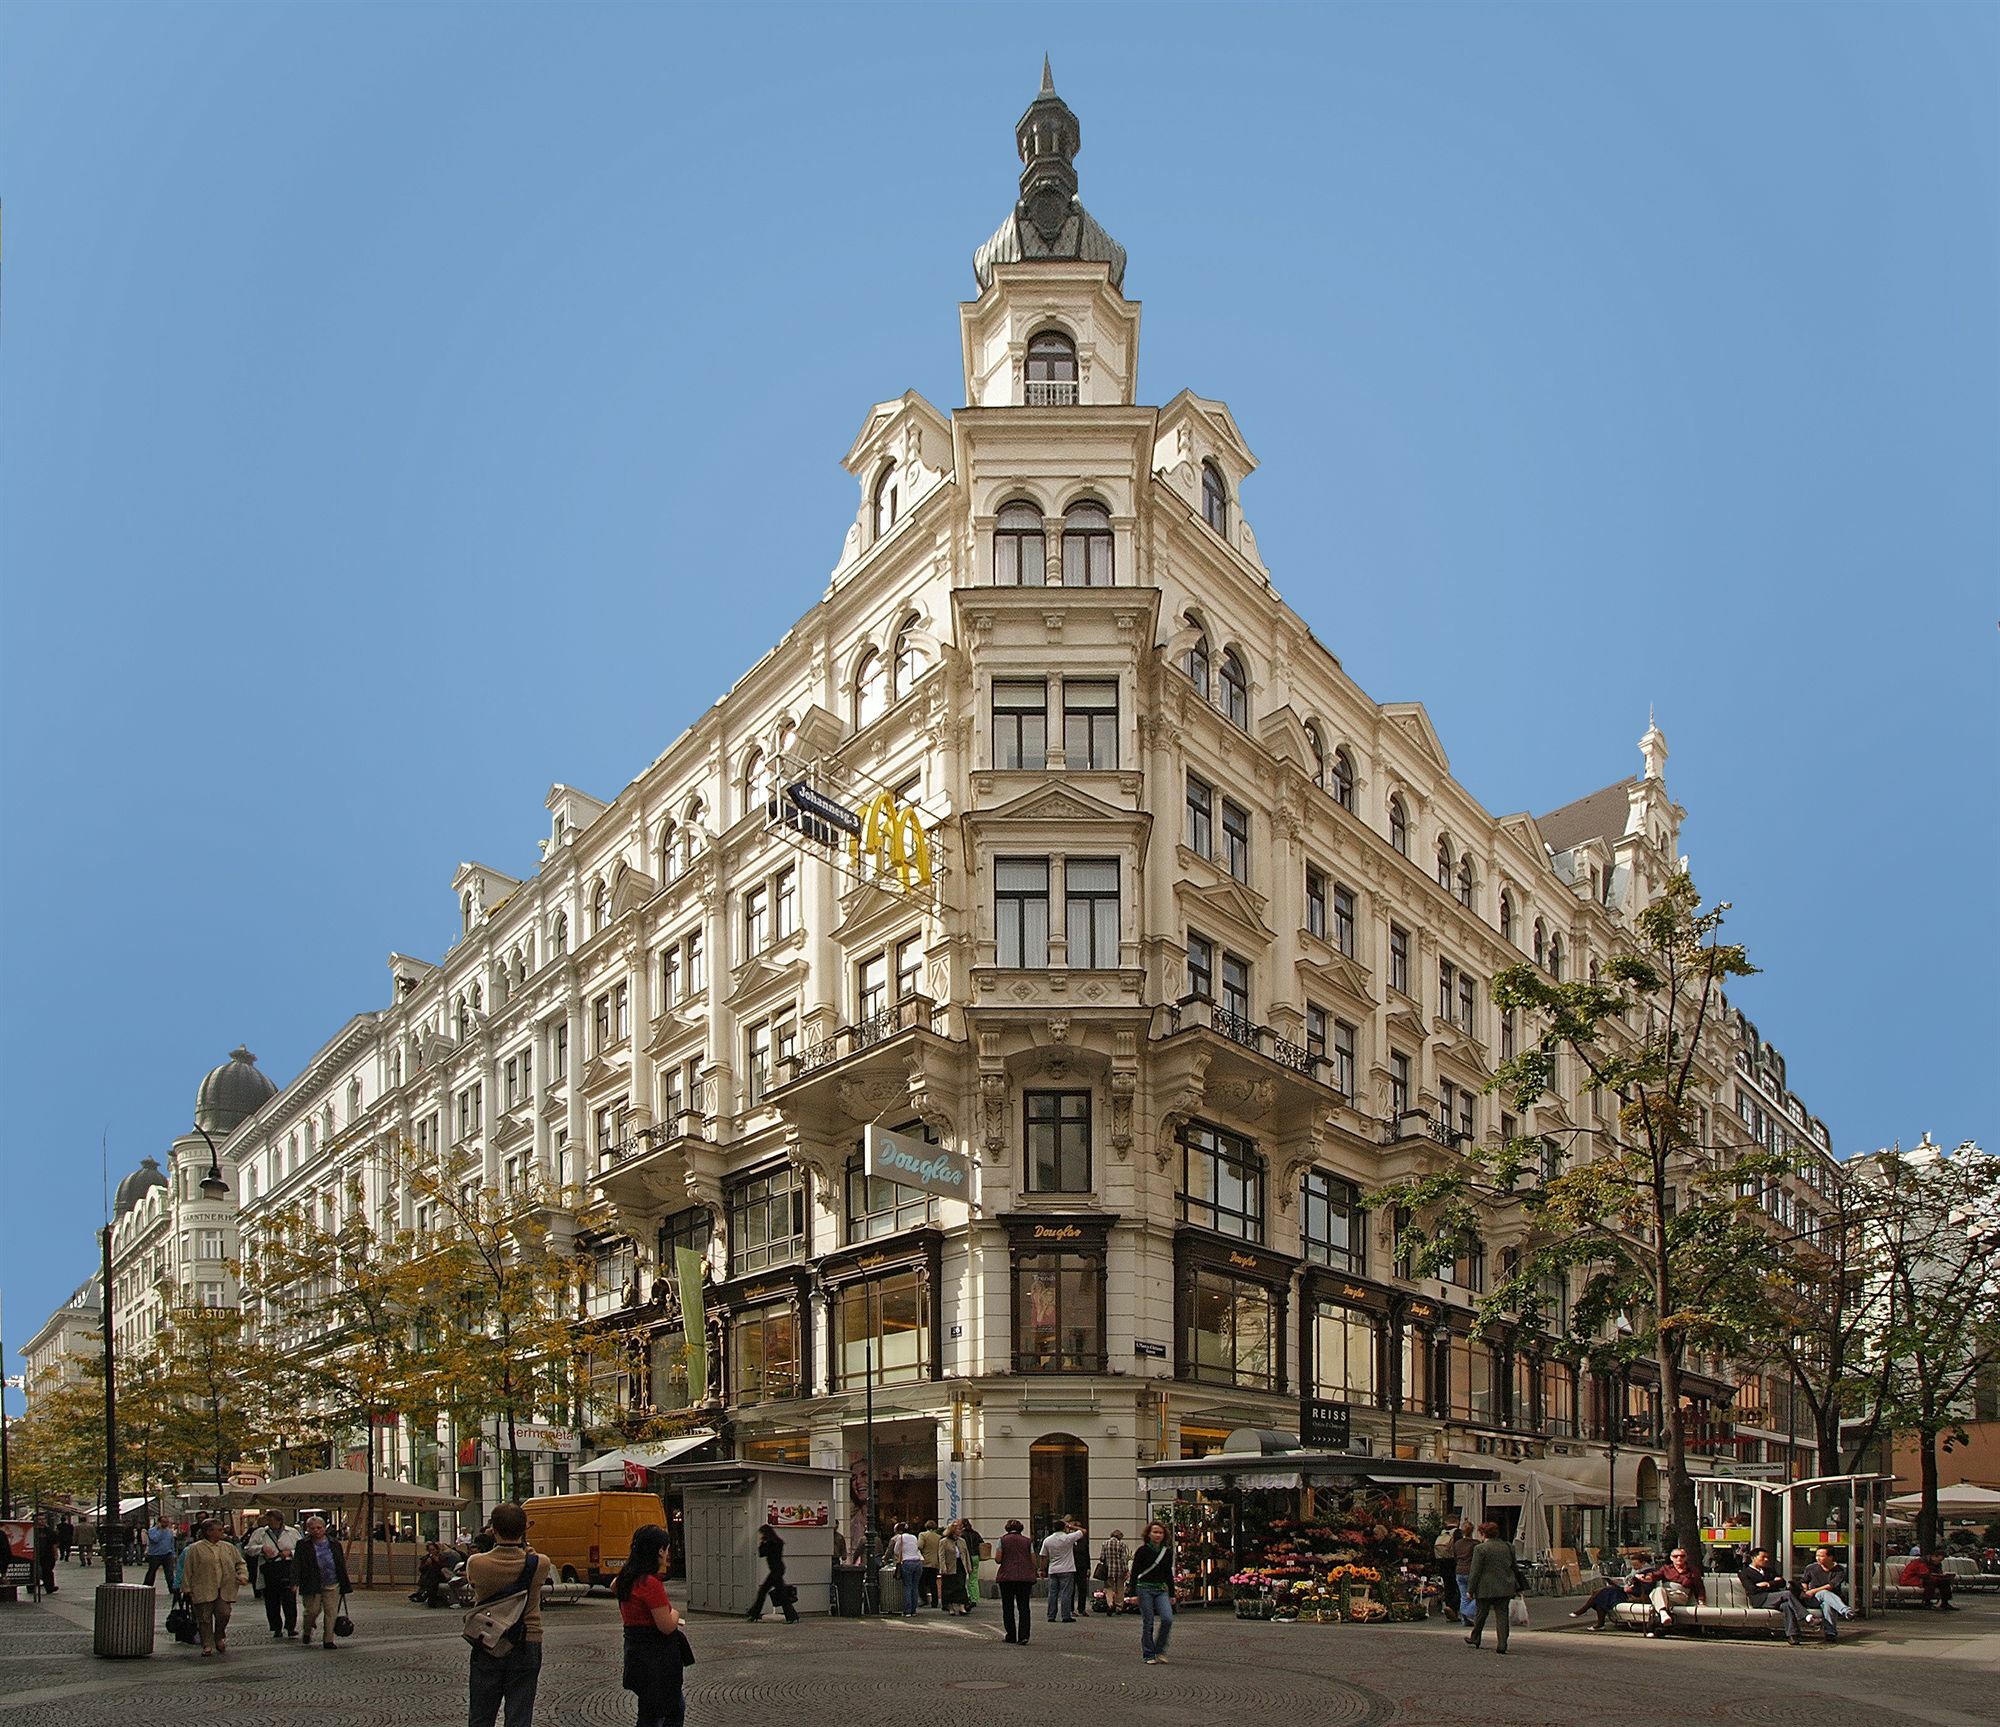 Aviano Boutiquehotel Vienna Exterior photo